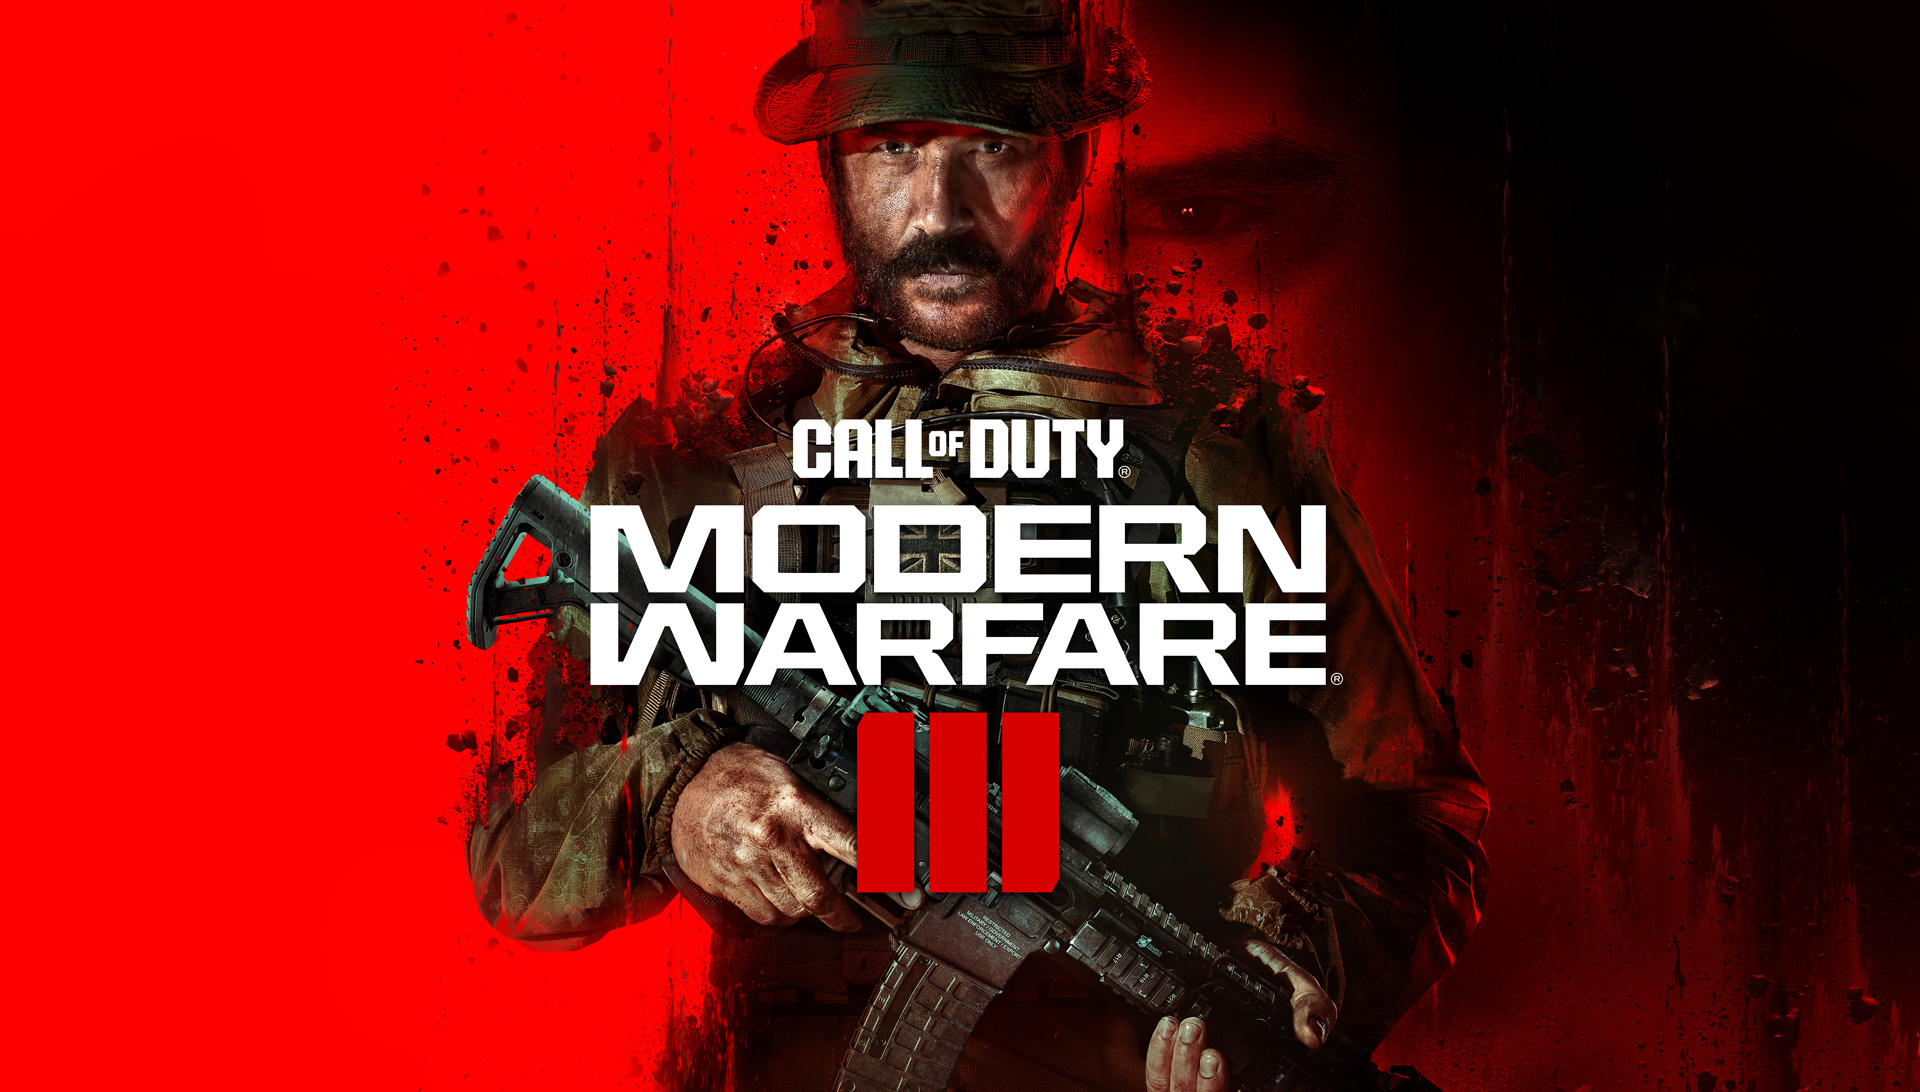 「Call of Duty Modern Warfare III」、オープンワールドの新ゾンビモードなど詳細を公開 GAME Watch